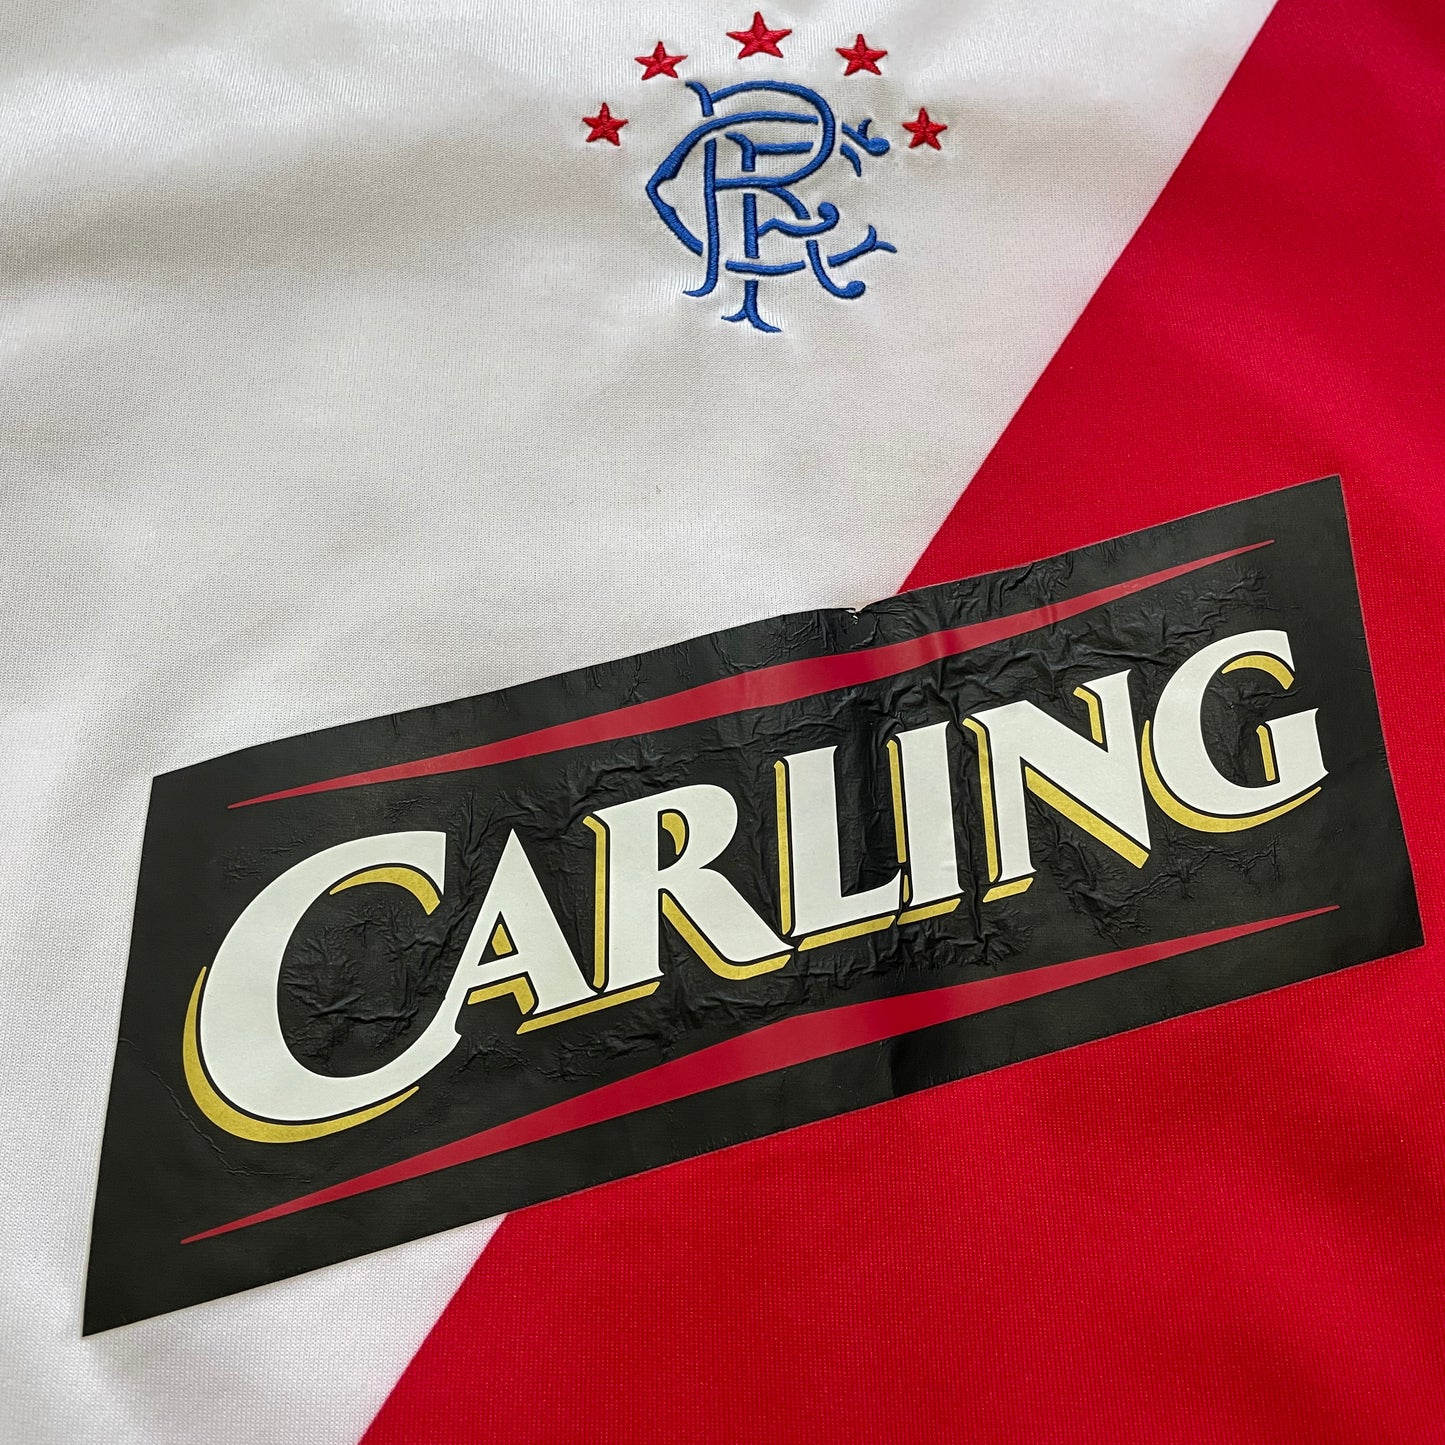 2006-2007 Rangers away shirt #17 Burke (L)